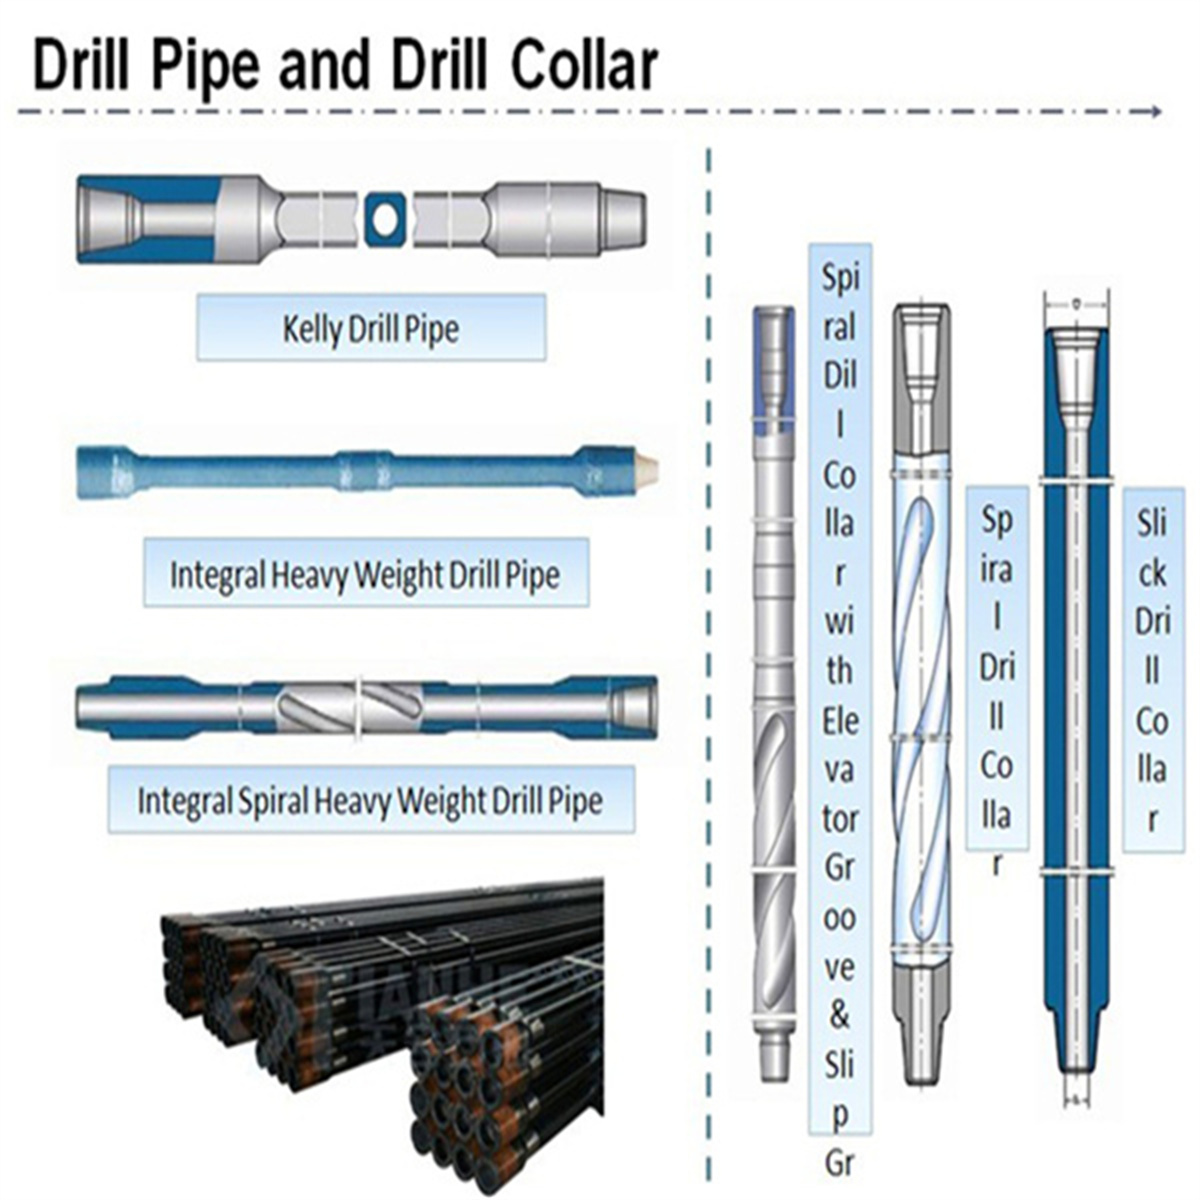 API 5L-Drill-Pipe-Steel Tube-ka-Drill-Steel Tube ee Ceel-Qodista Saliidda (41)